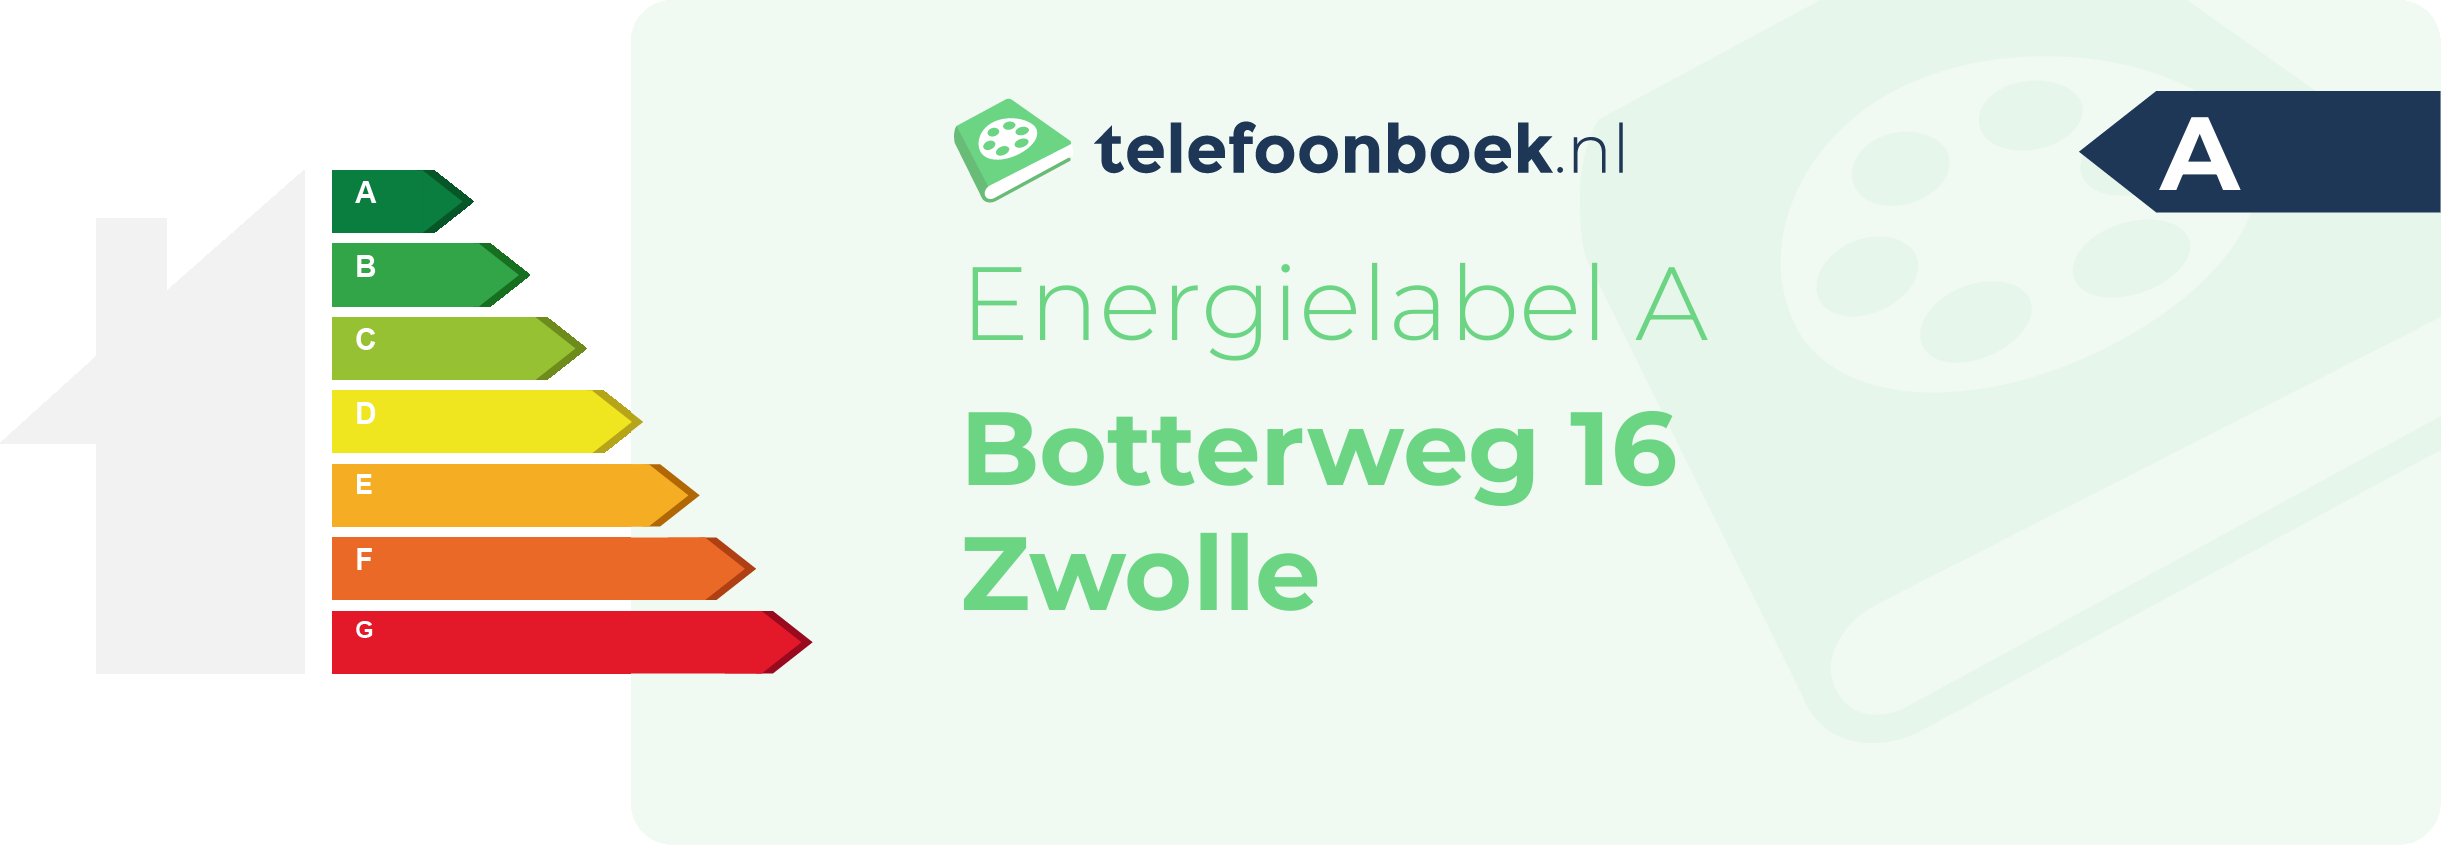 Energielabel Botterweg 16 Zwolle